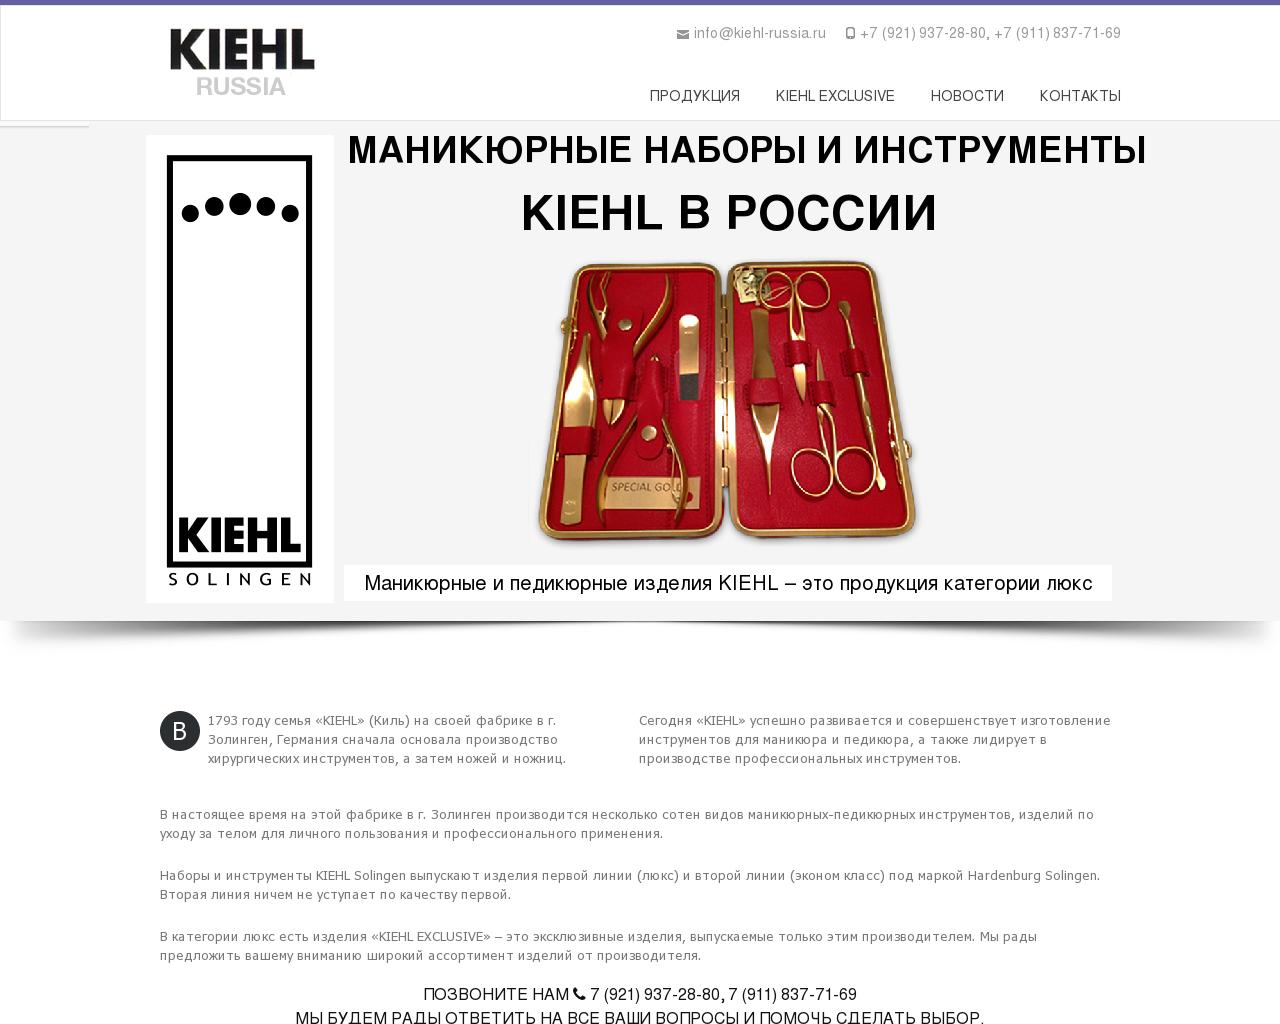 Изображение сайта kiehl-russia.ru в разрешении 1280x1024